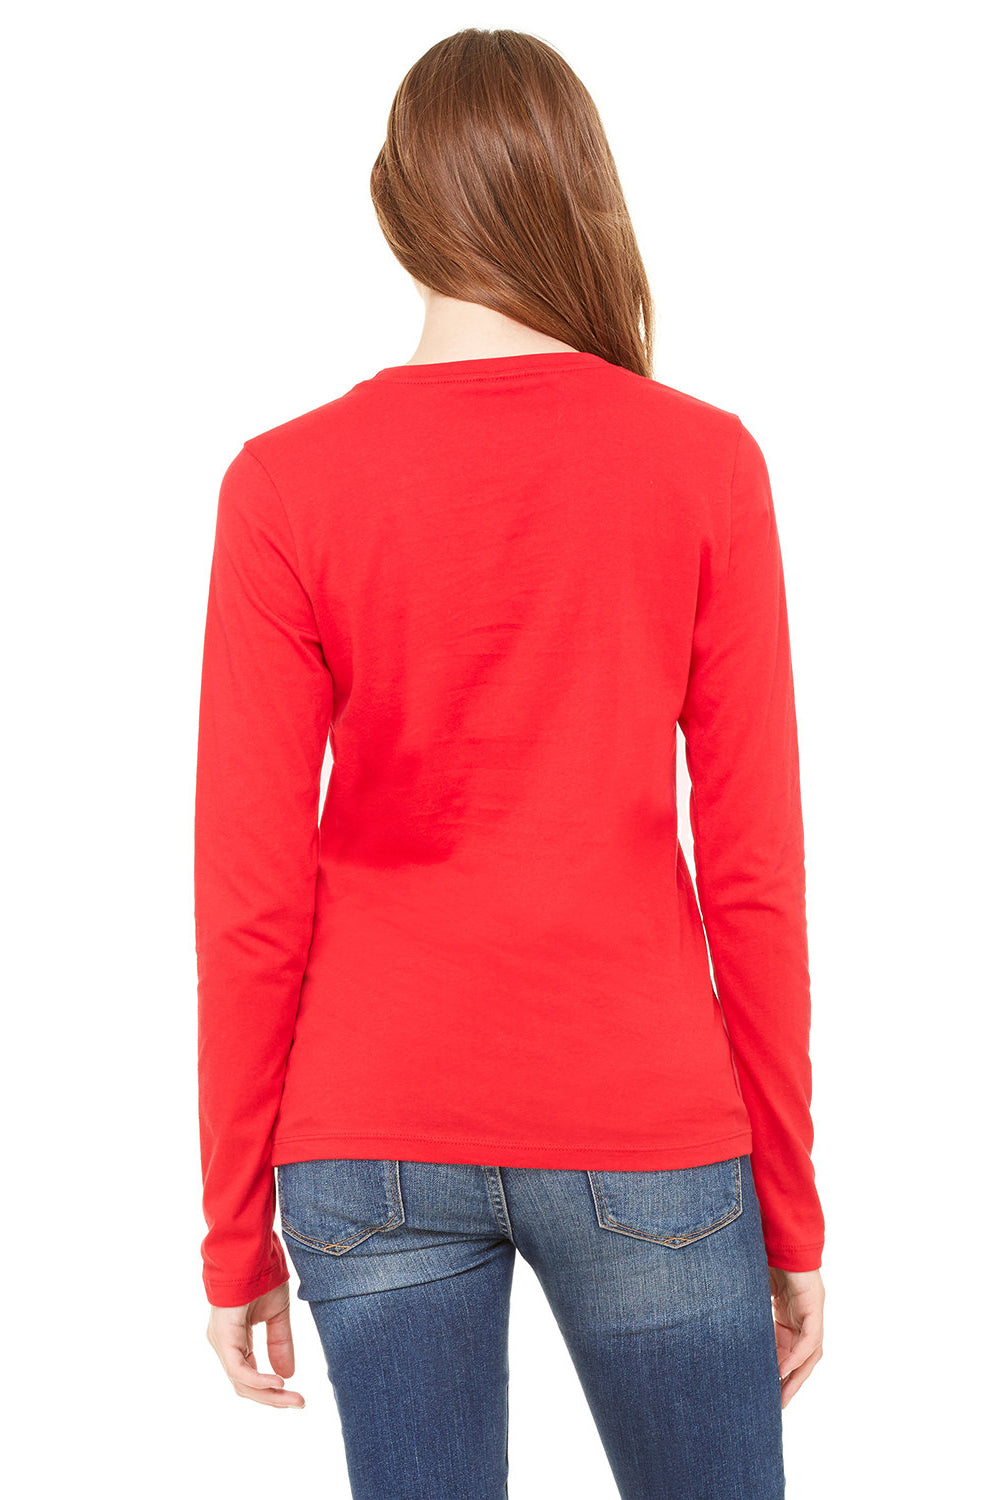 Bella + Canvas B6500/6500 Womens Jersey Long Sleeve Crewneck T-Shirt Red Model Back